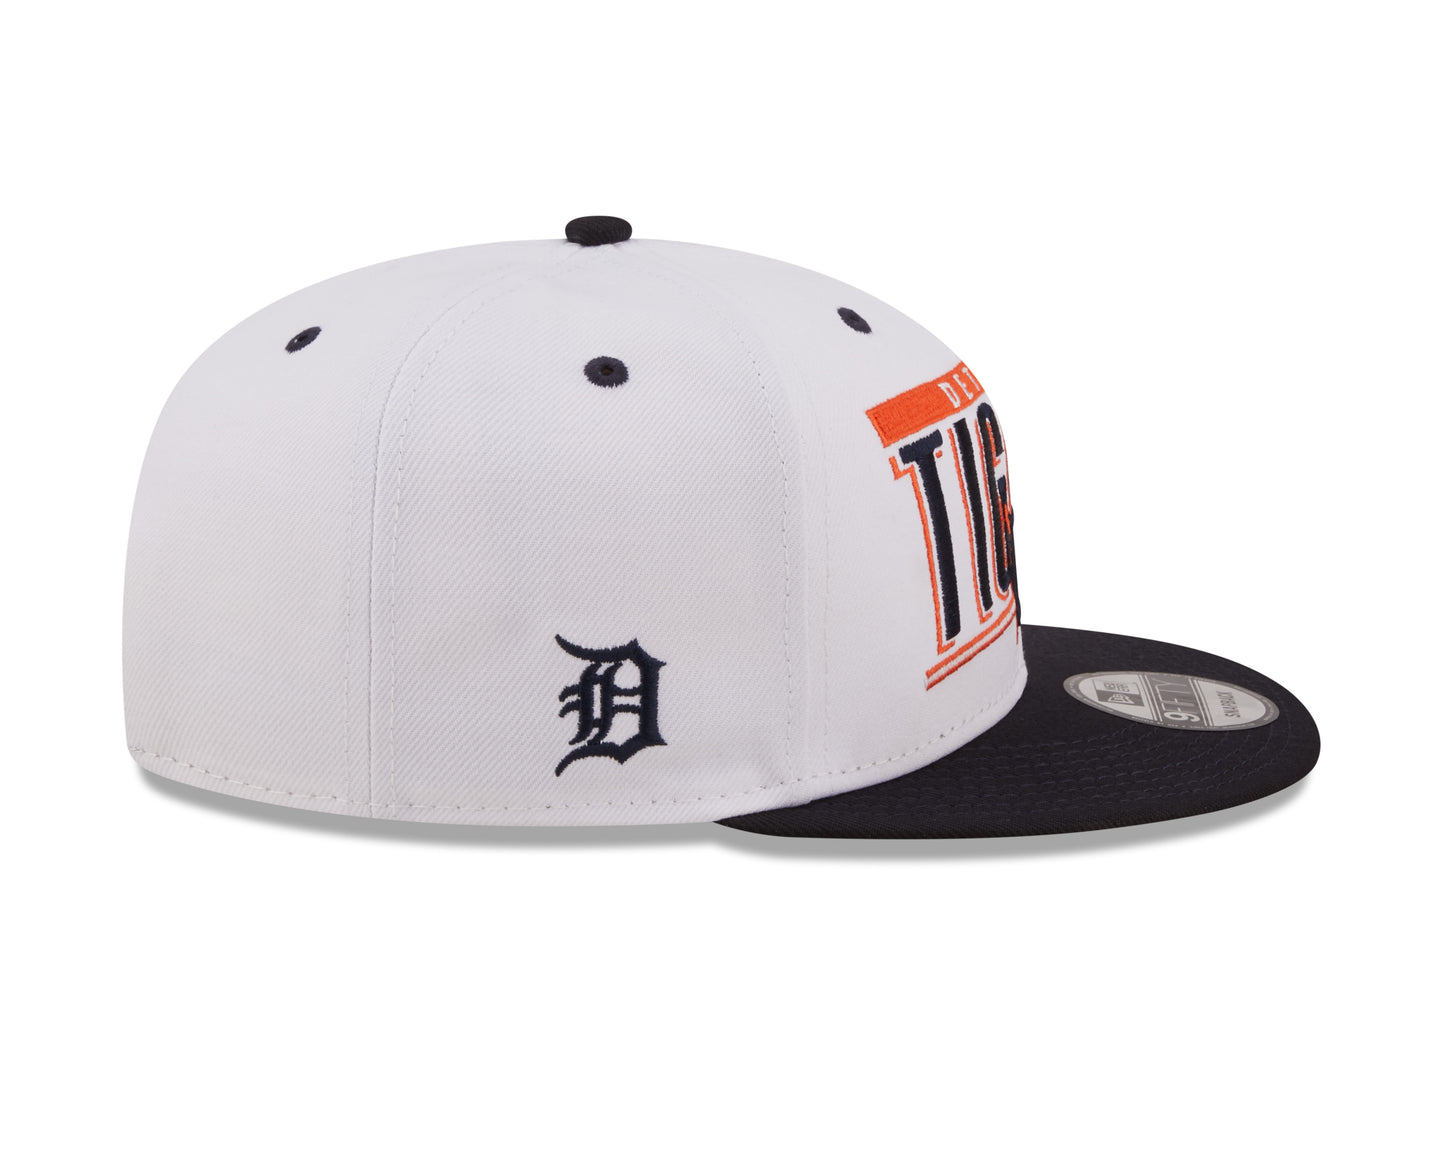 Detroit Tigers New Era Retro Title 9FIFTY Snapback Hat - White/Navy